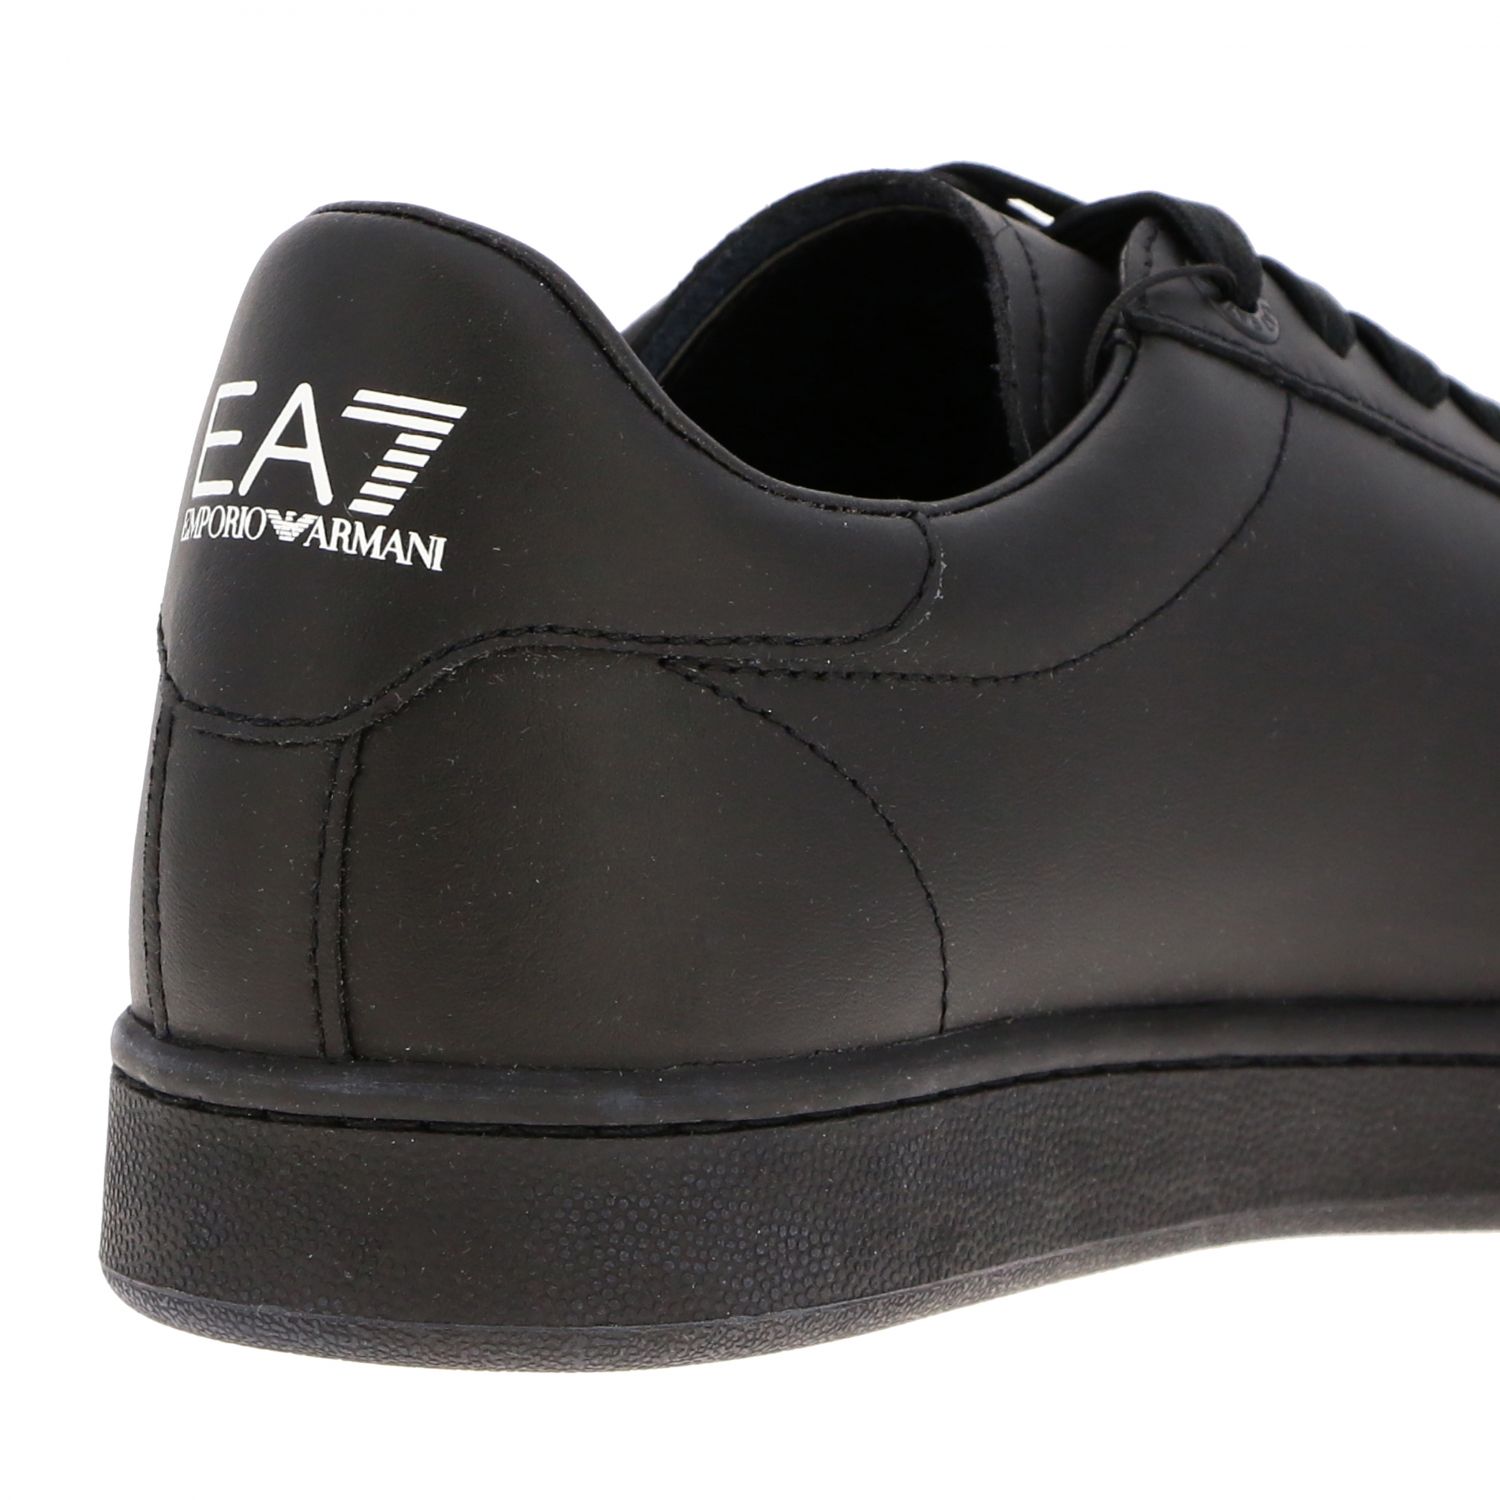 Sneakers men Ea7 | Sneakers Ea7 Men Black | Sneakers Ea7 X8X001 XCC51 ...